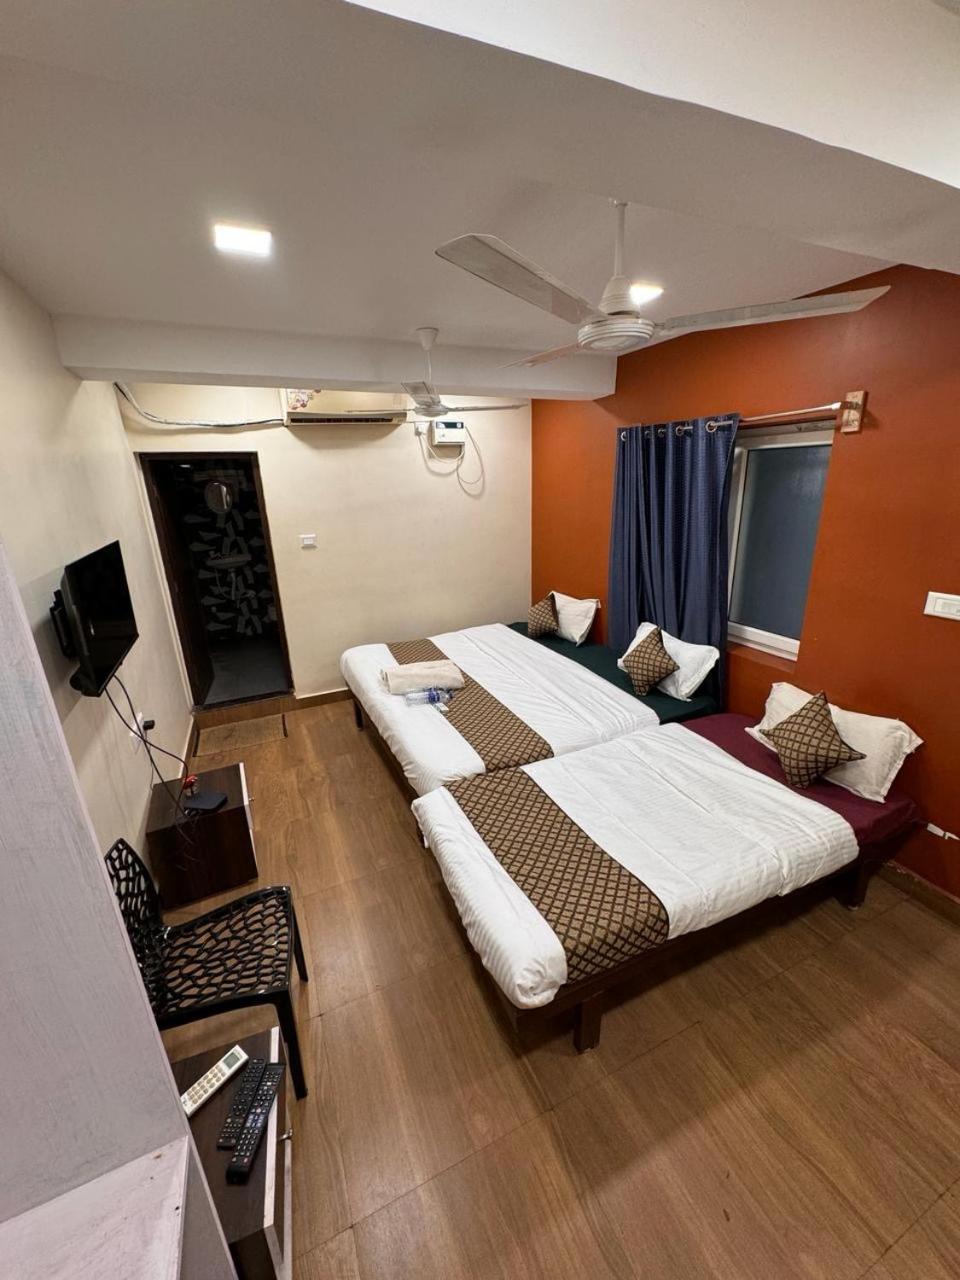 Hôtel David Residency à Madurai Extérieur photo